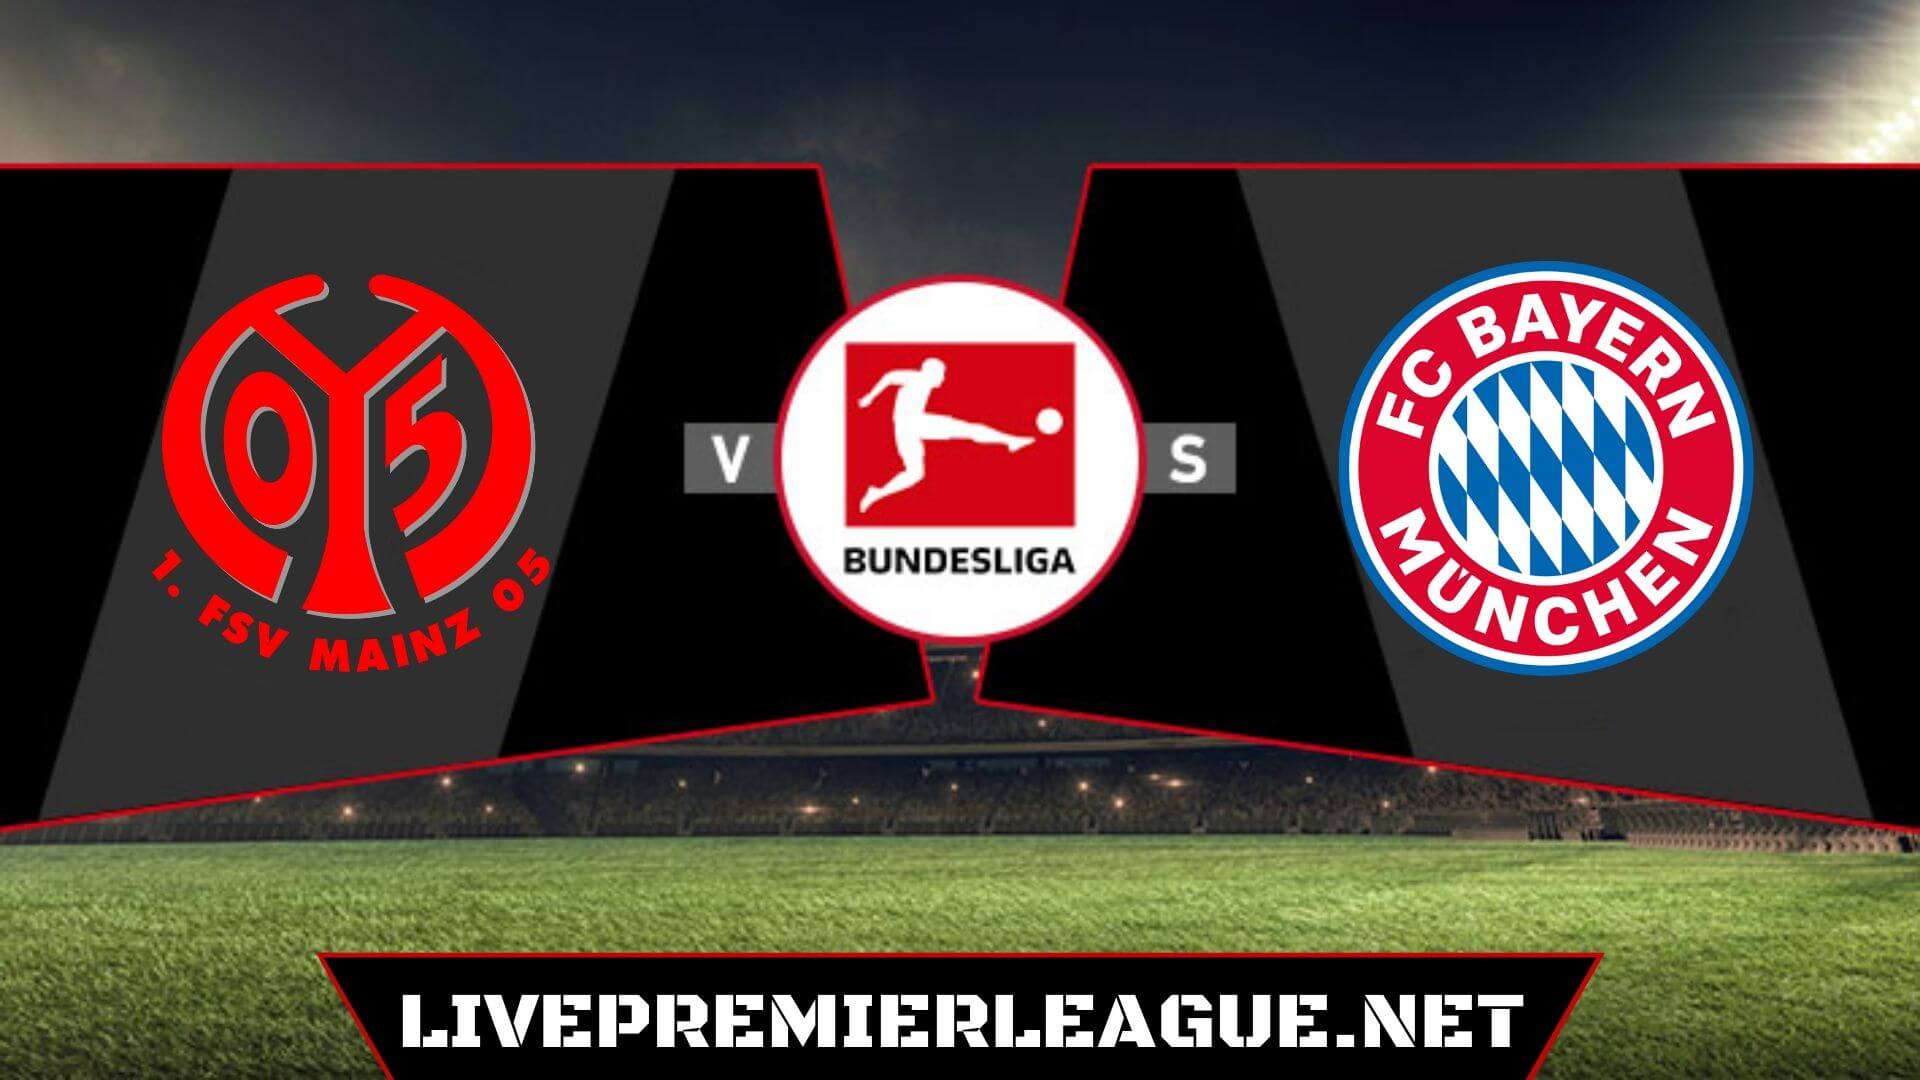 FSV Mainz VS FC Bayern Munchen Live Stream | Match 20